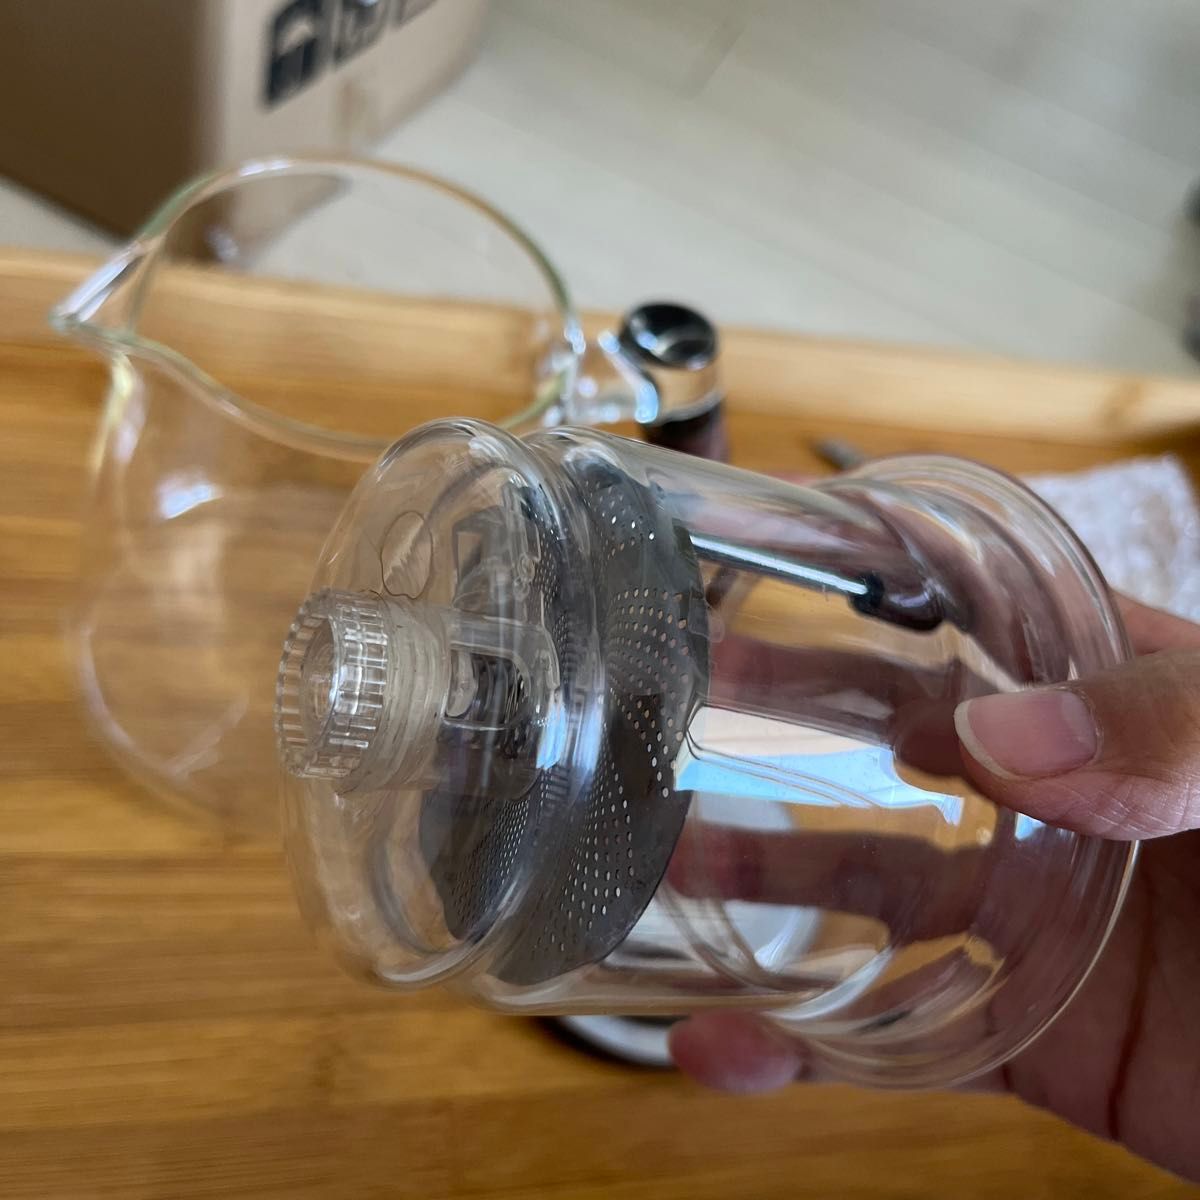 C1 ティーポット 耐熱ガラス 押し出し式茶こし付き 透明ガラス急須 直火対応 フィルター茶水分離茶メーカー 耐熱性 新品